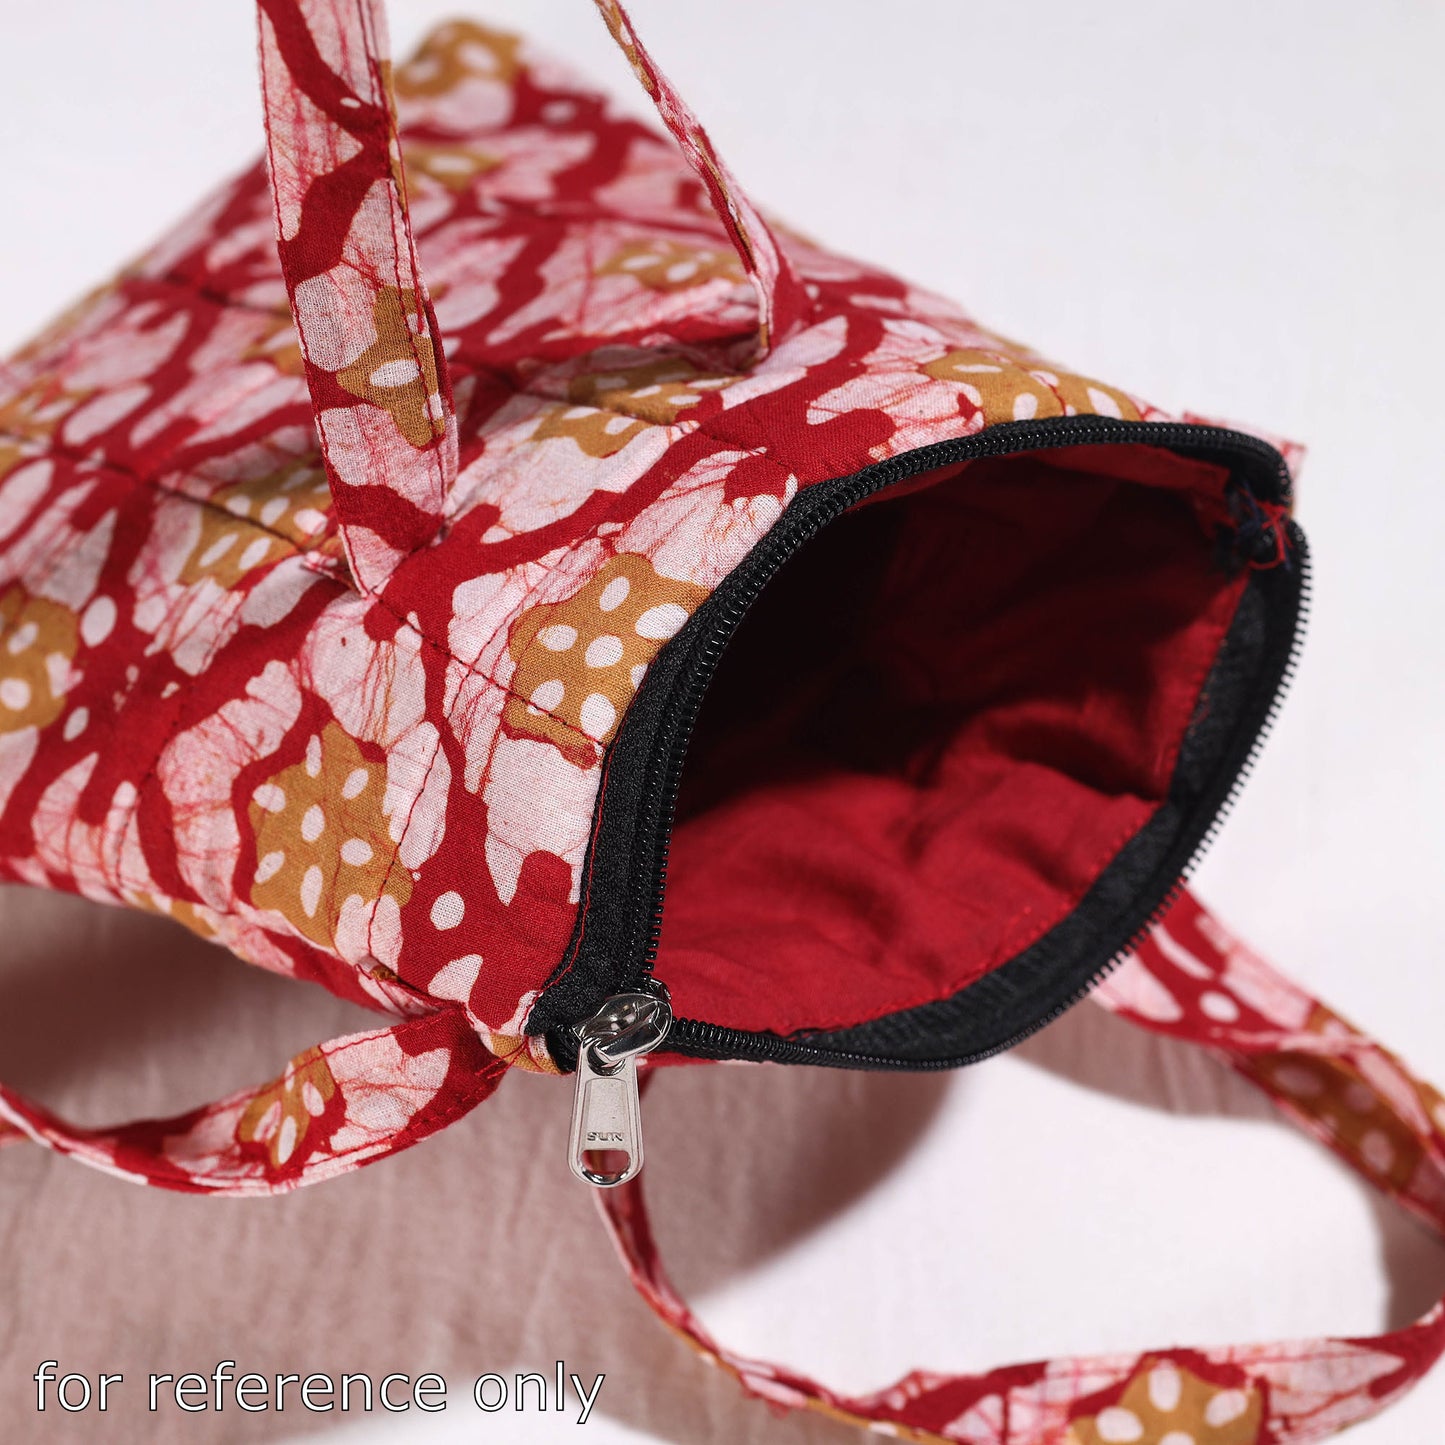 Pink - Hand Batik Printed Quilted Cotton Sling Bag 04